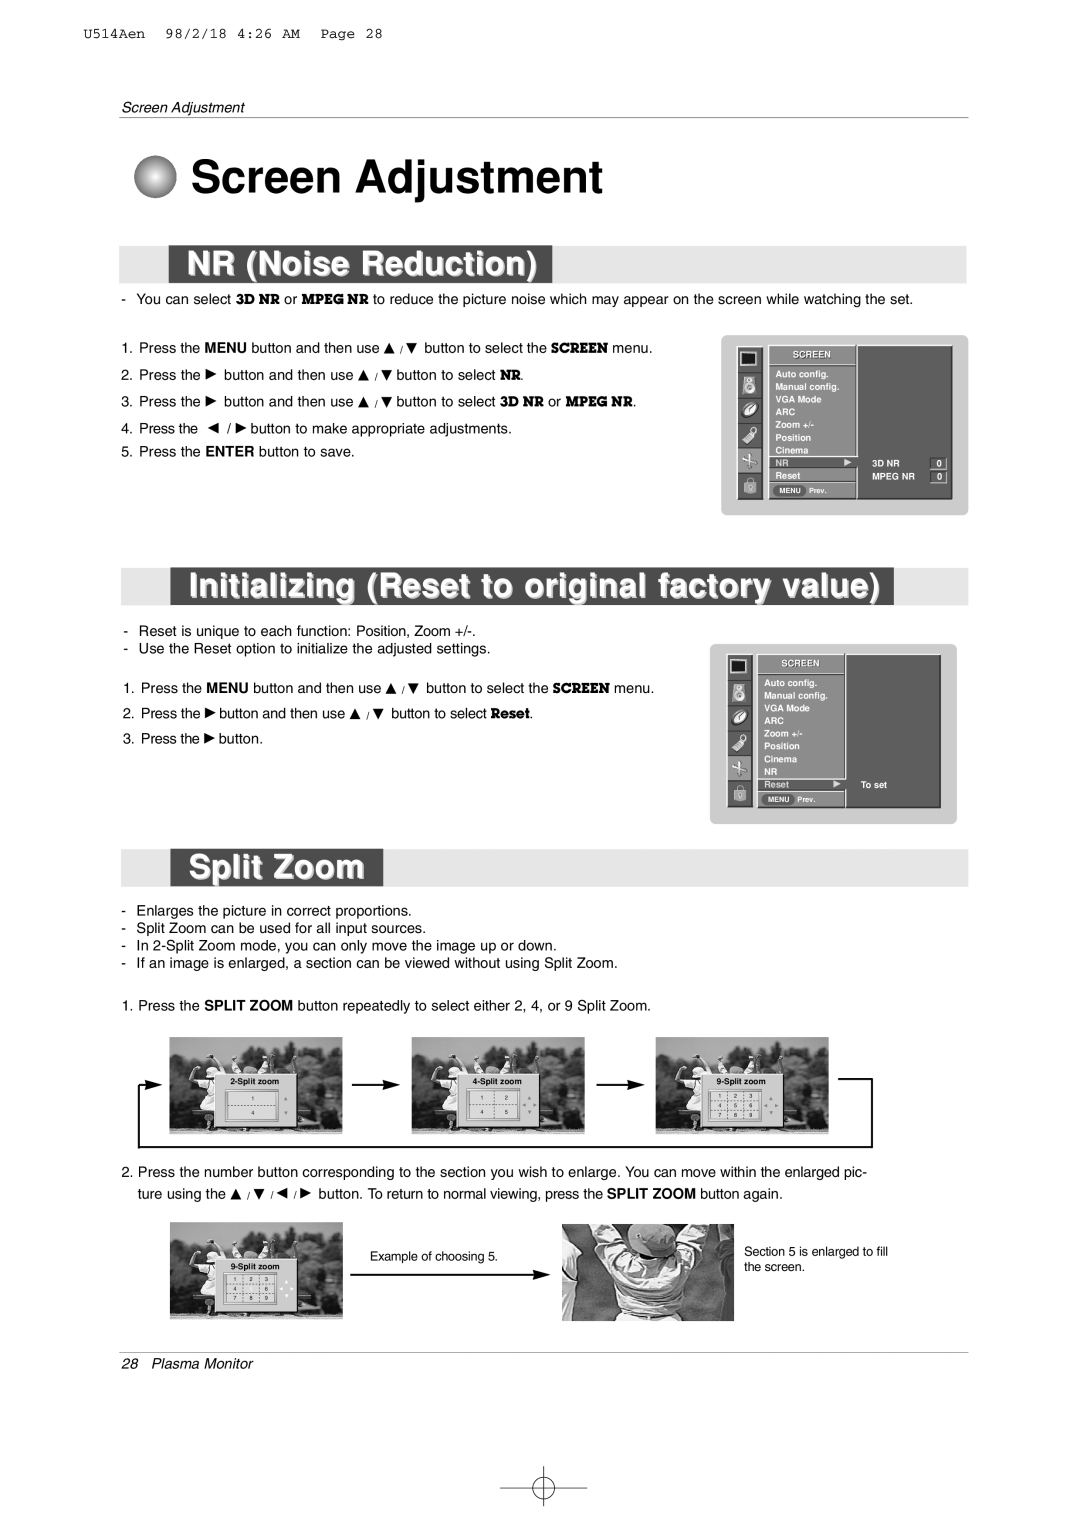 LG Electronics 42PM1M NR Noise Reduction, Initializing Reset to original factory value, Split Zoom, Screen Adjustment 